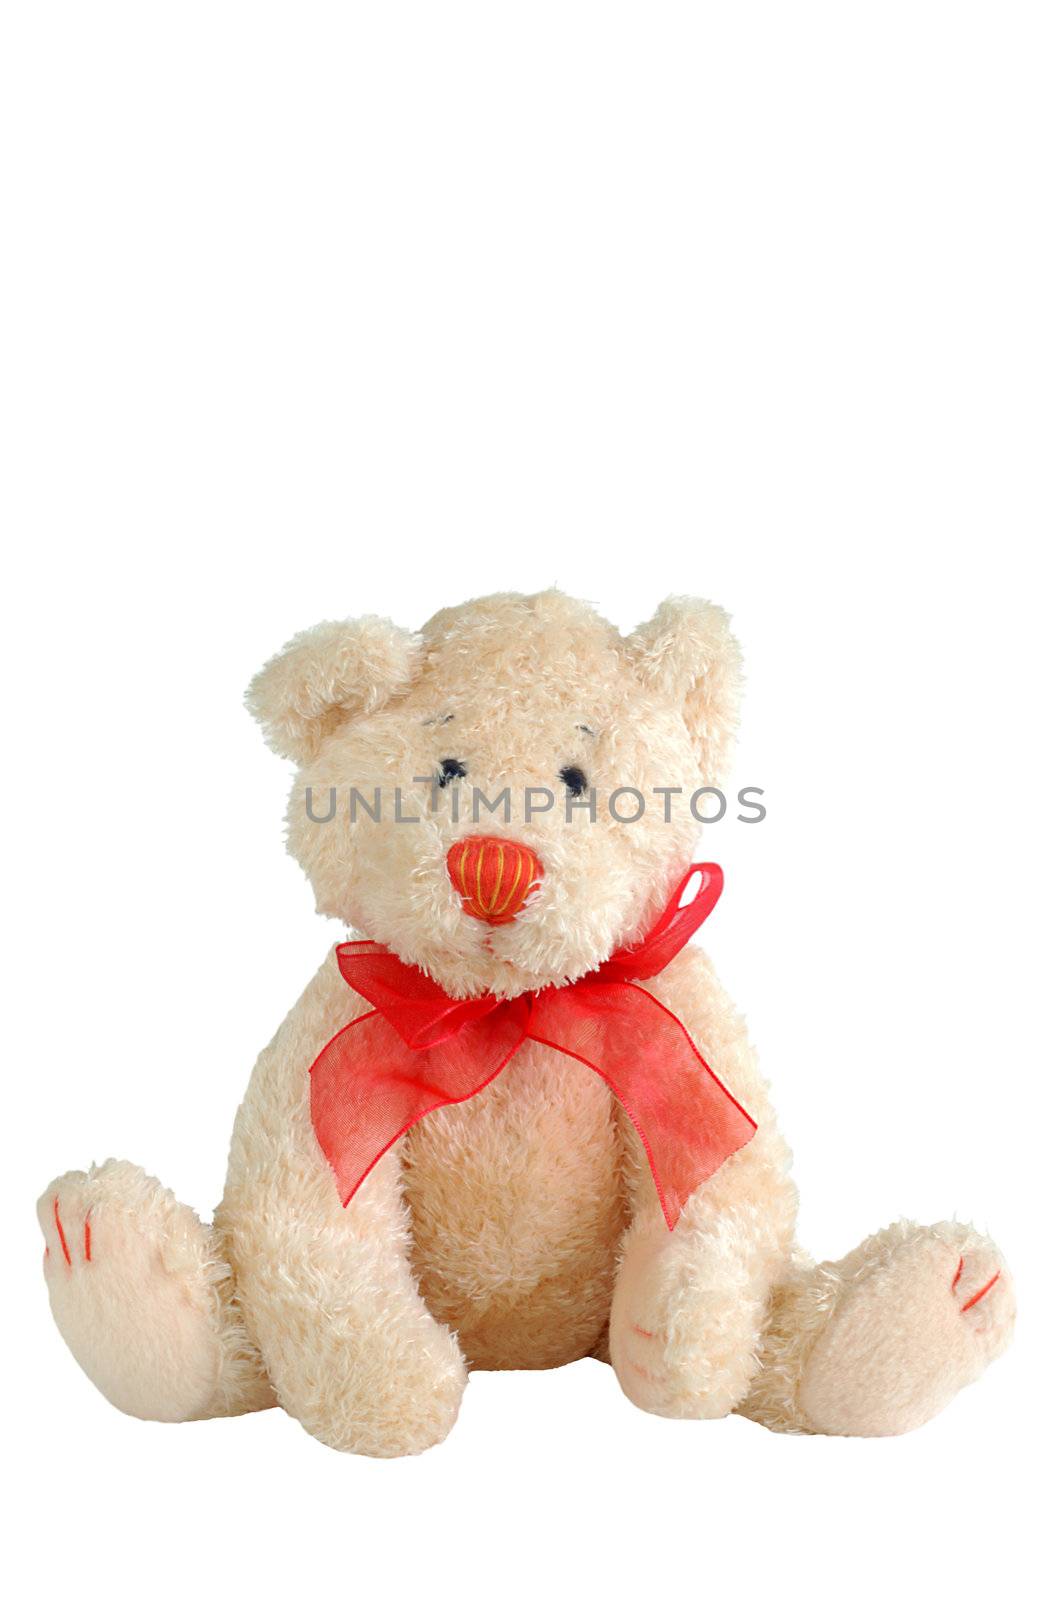 stuffed teddy bear isolated on white